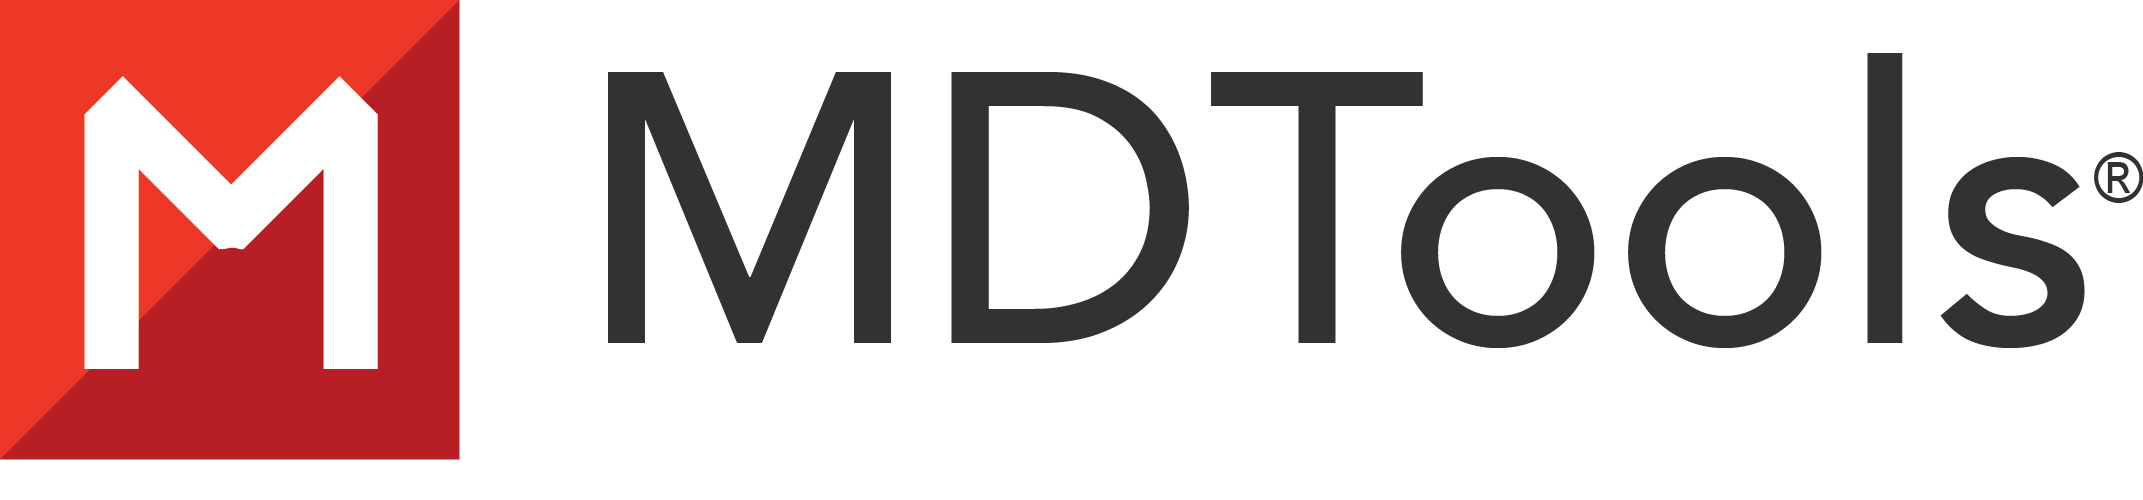 MDTools logo